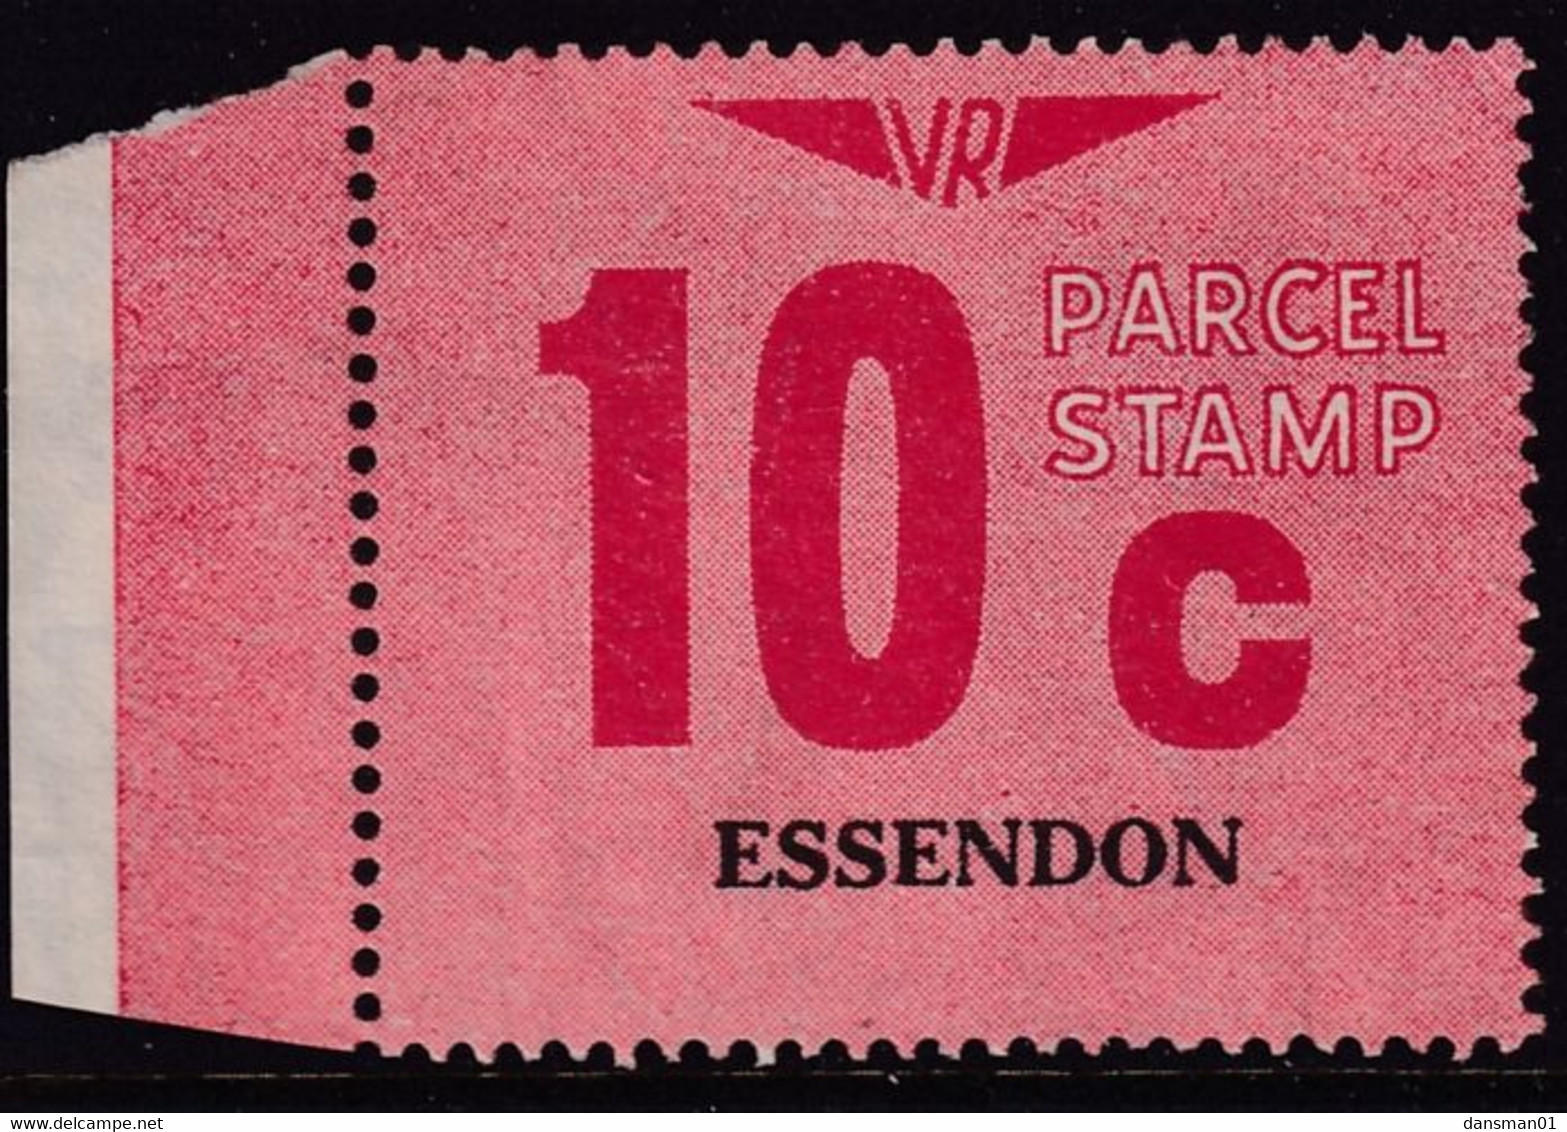 Victoria 1966 Railway Parcel Stamp 10c ESSENDON Used - Errors, Freaks & Oddities (EFO)